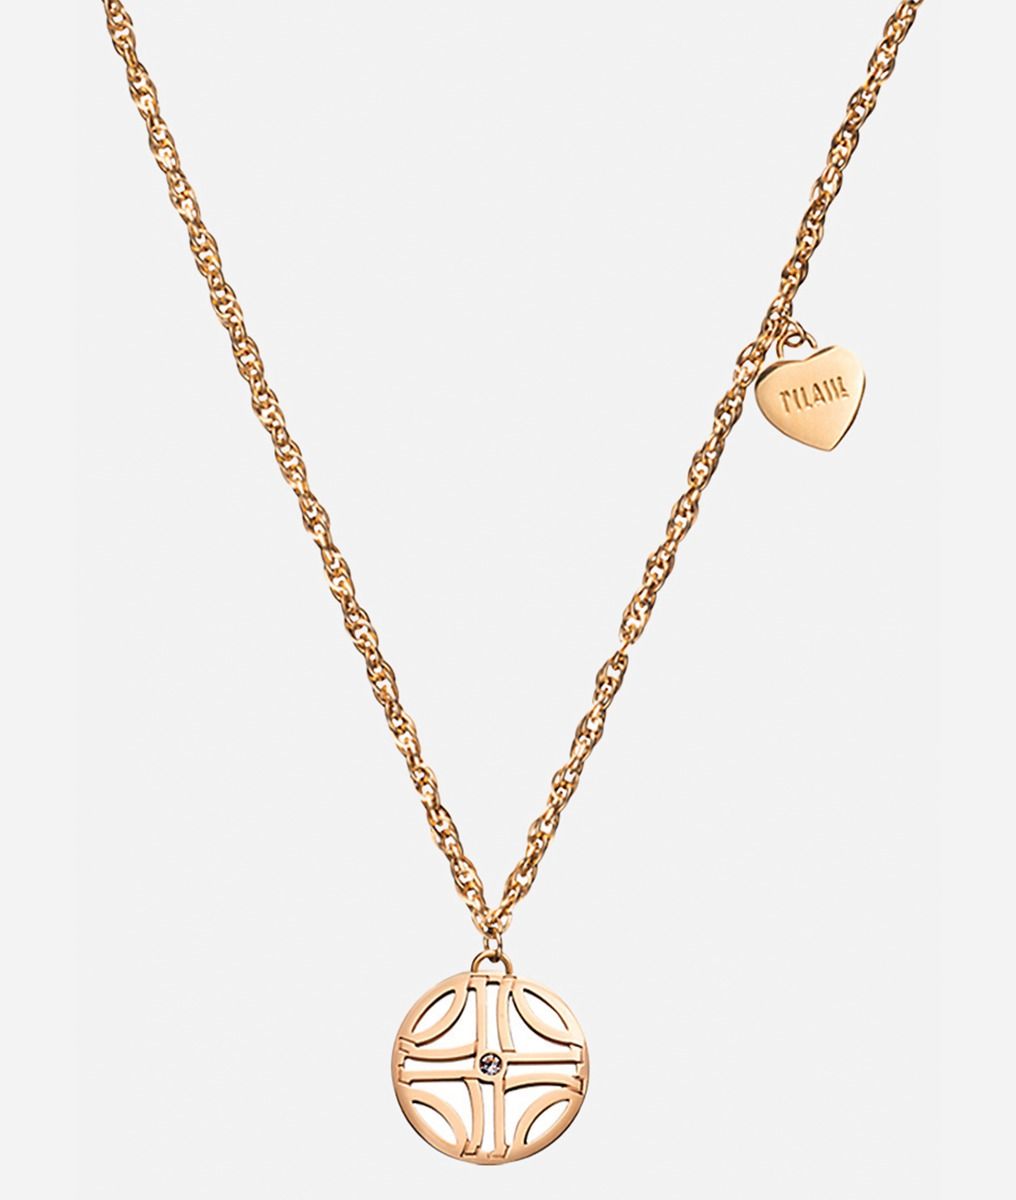 La Croisette gold-finish necklace with charm,front